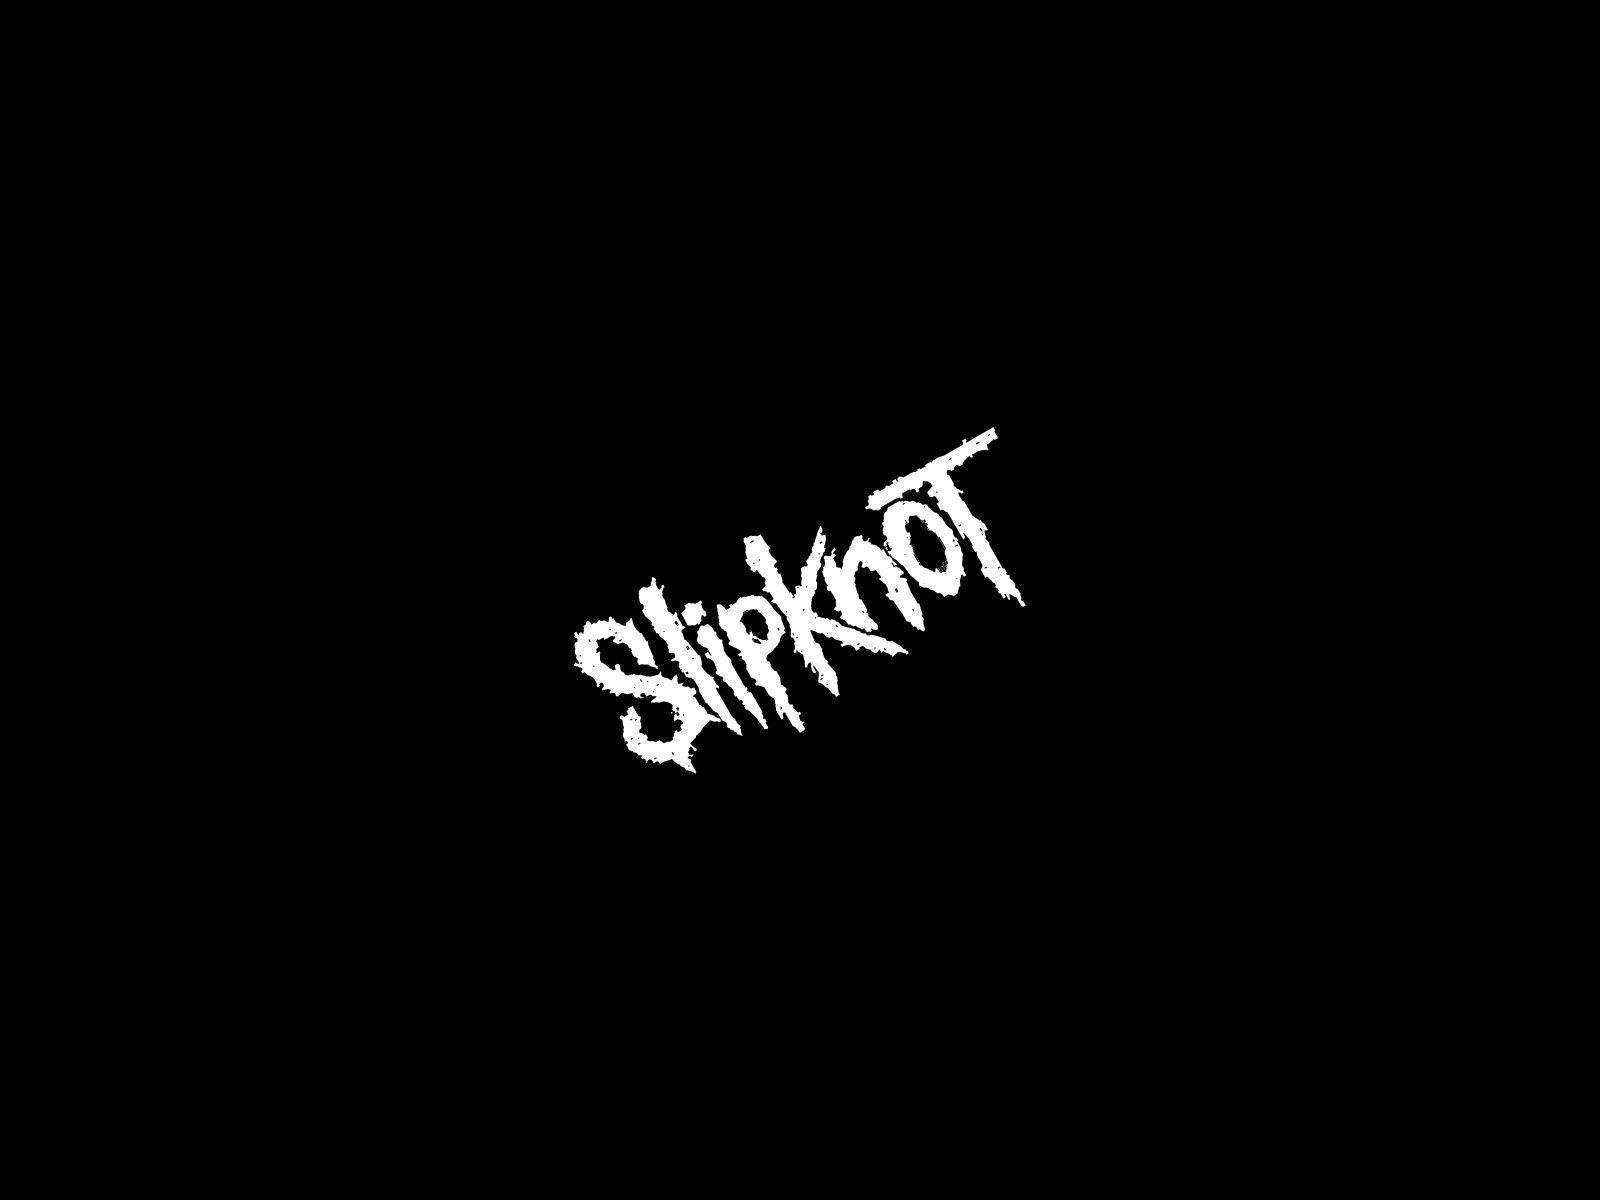 Slipknot logo and wallpapers